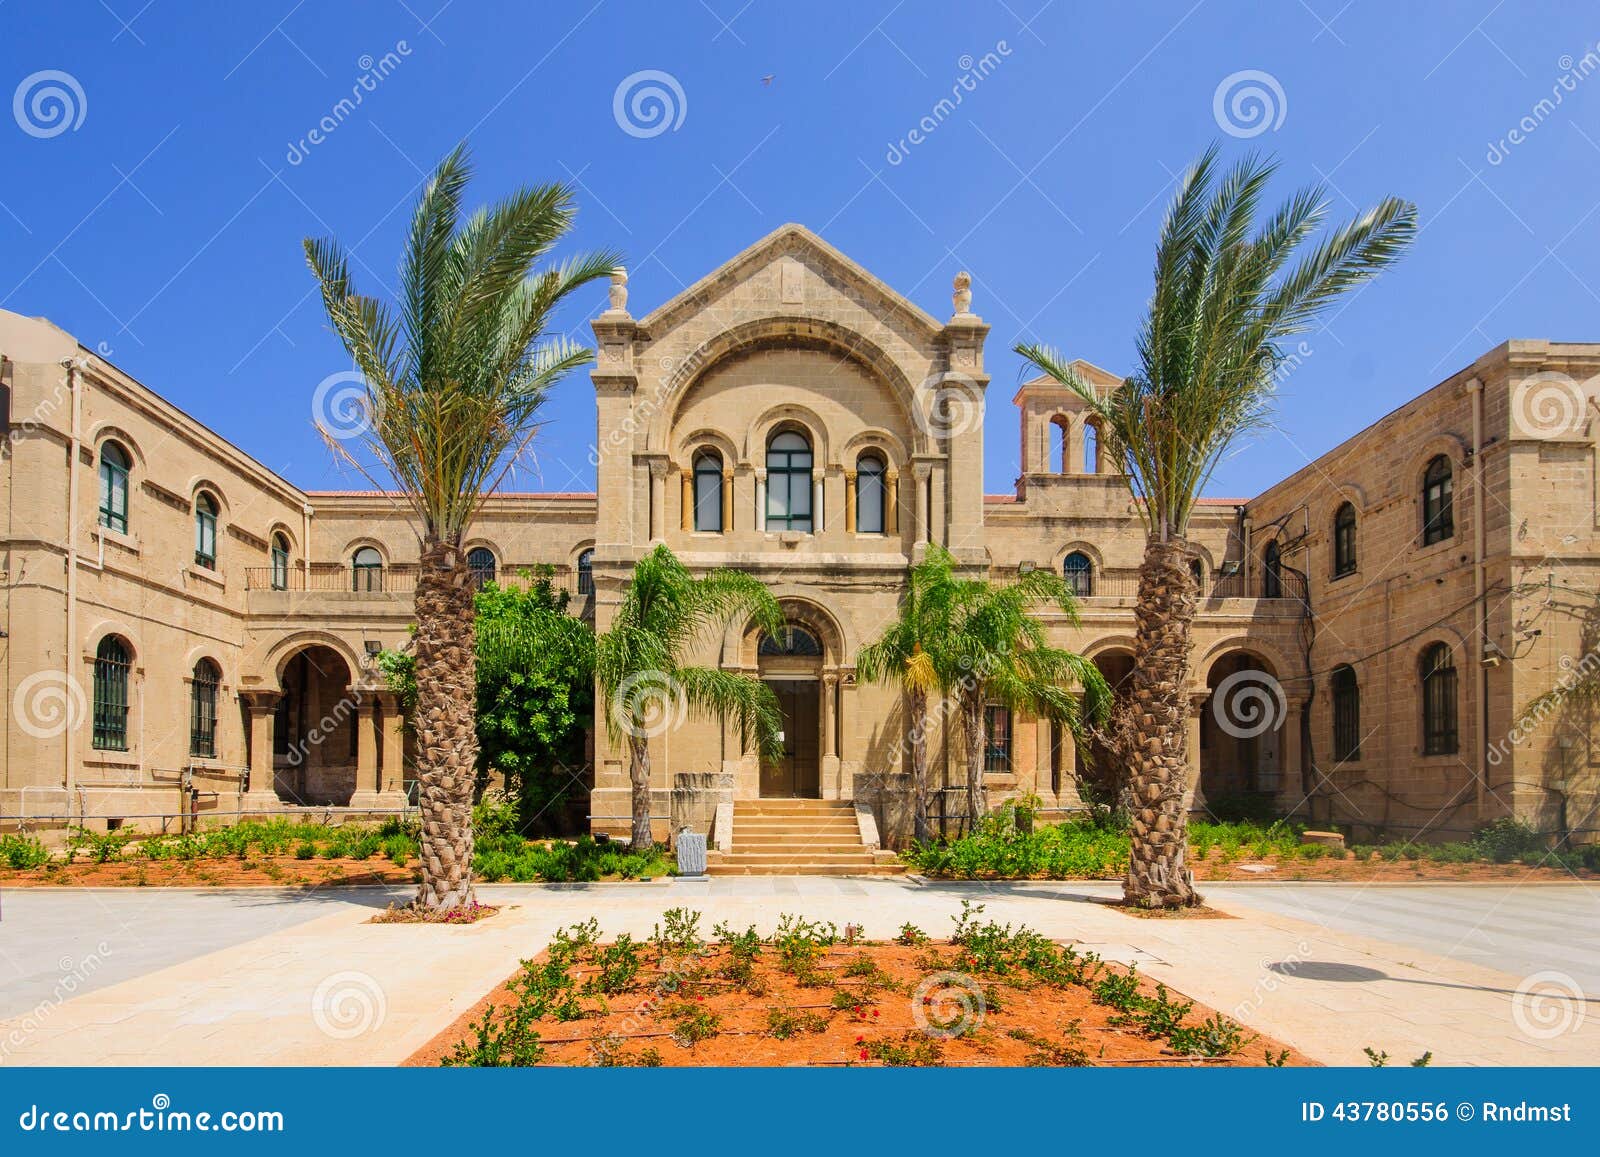 carmelite monastery, haifa